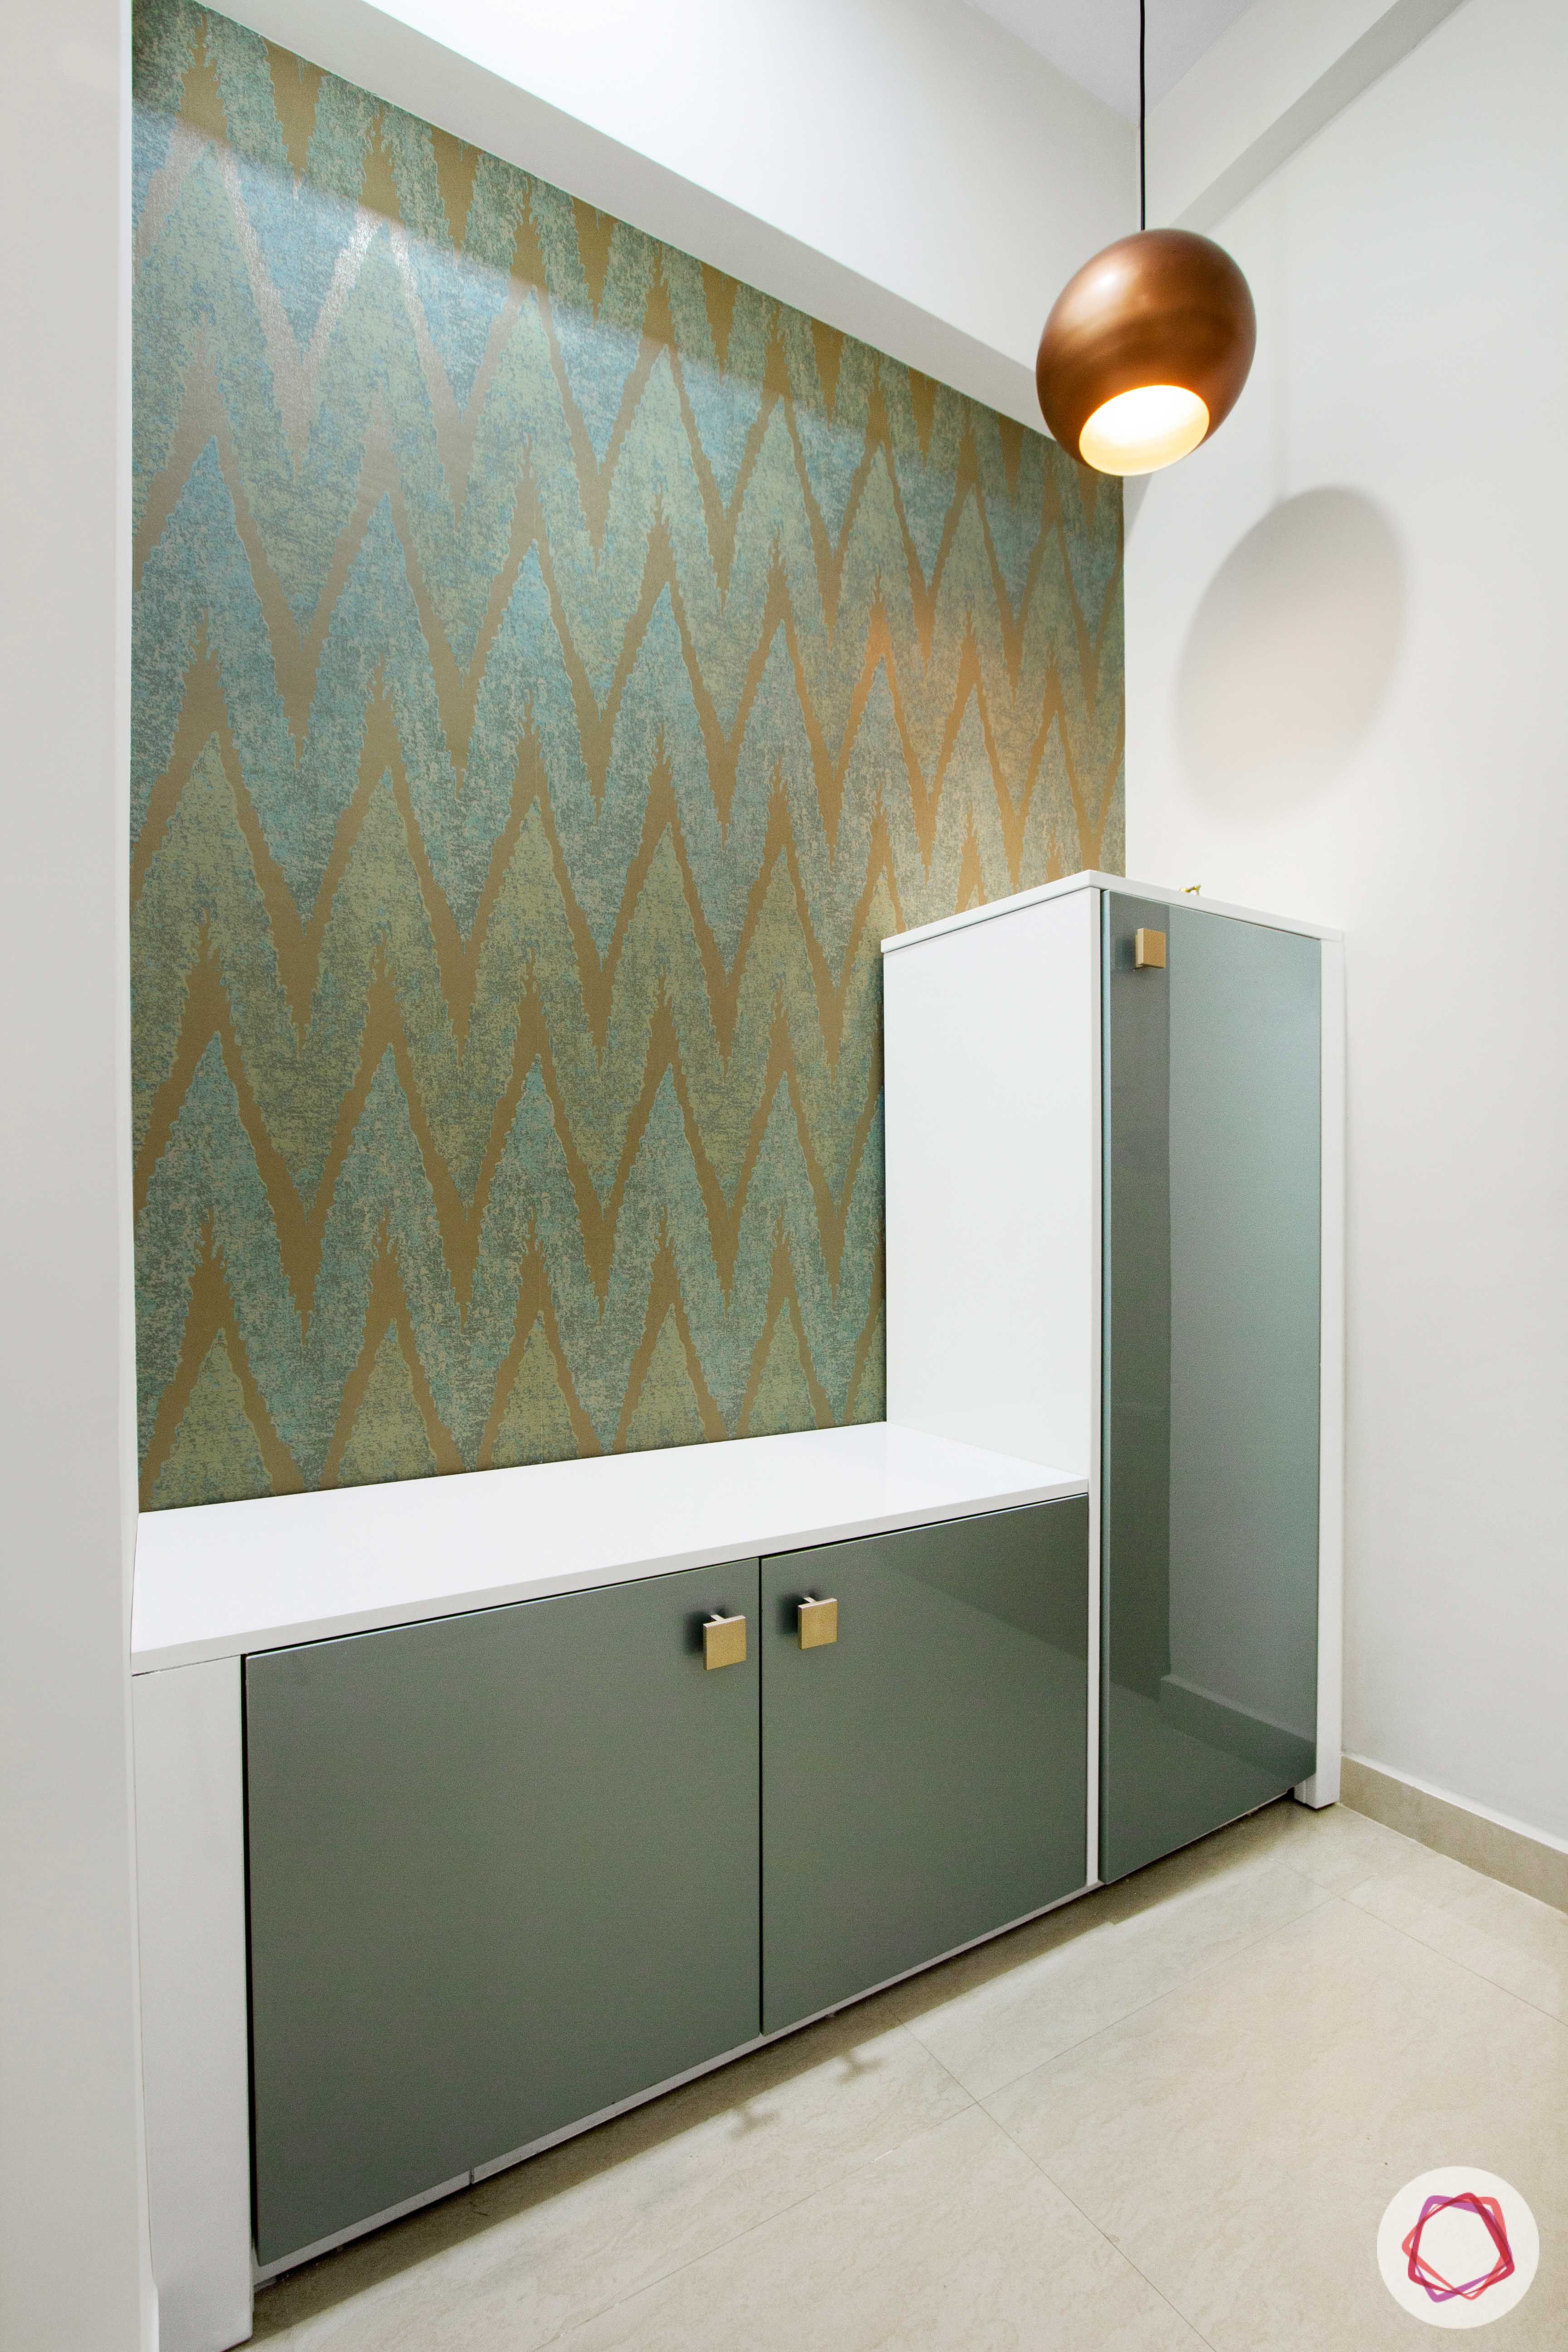 nitesh hyde park-green wallpaper designs-green cabinet